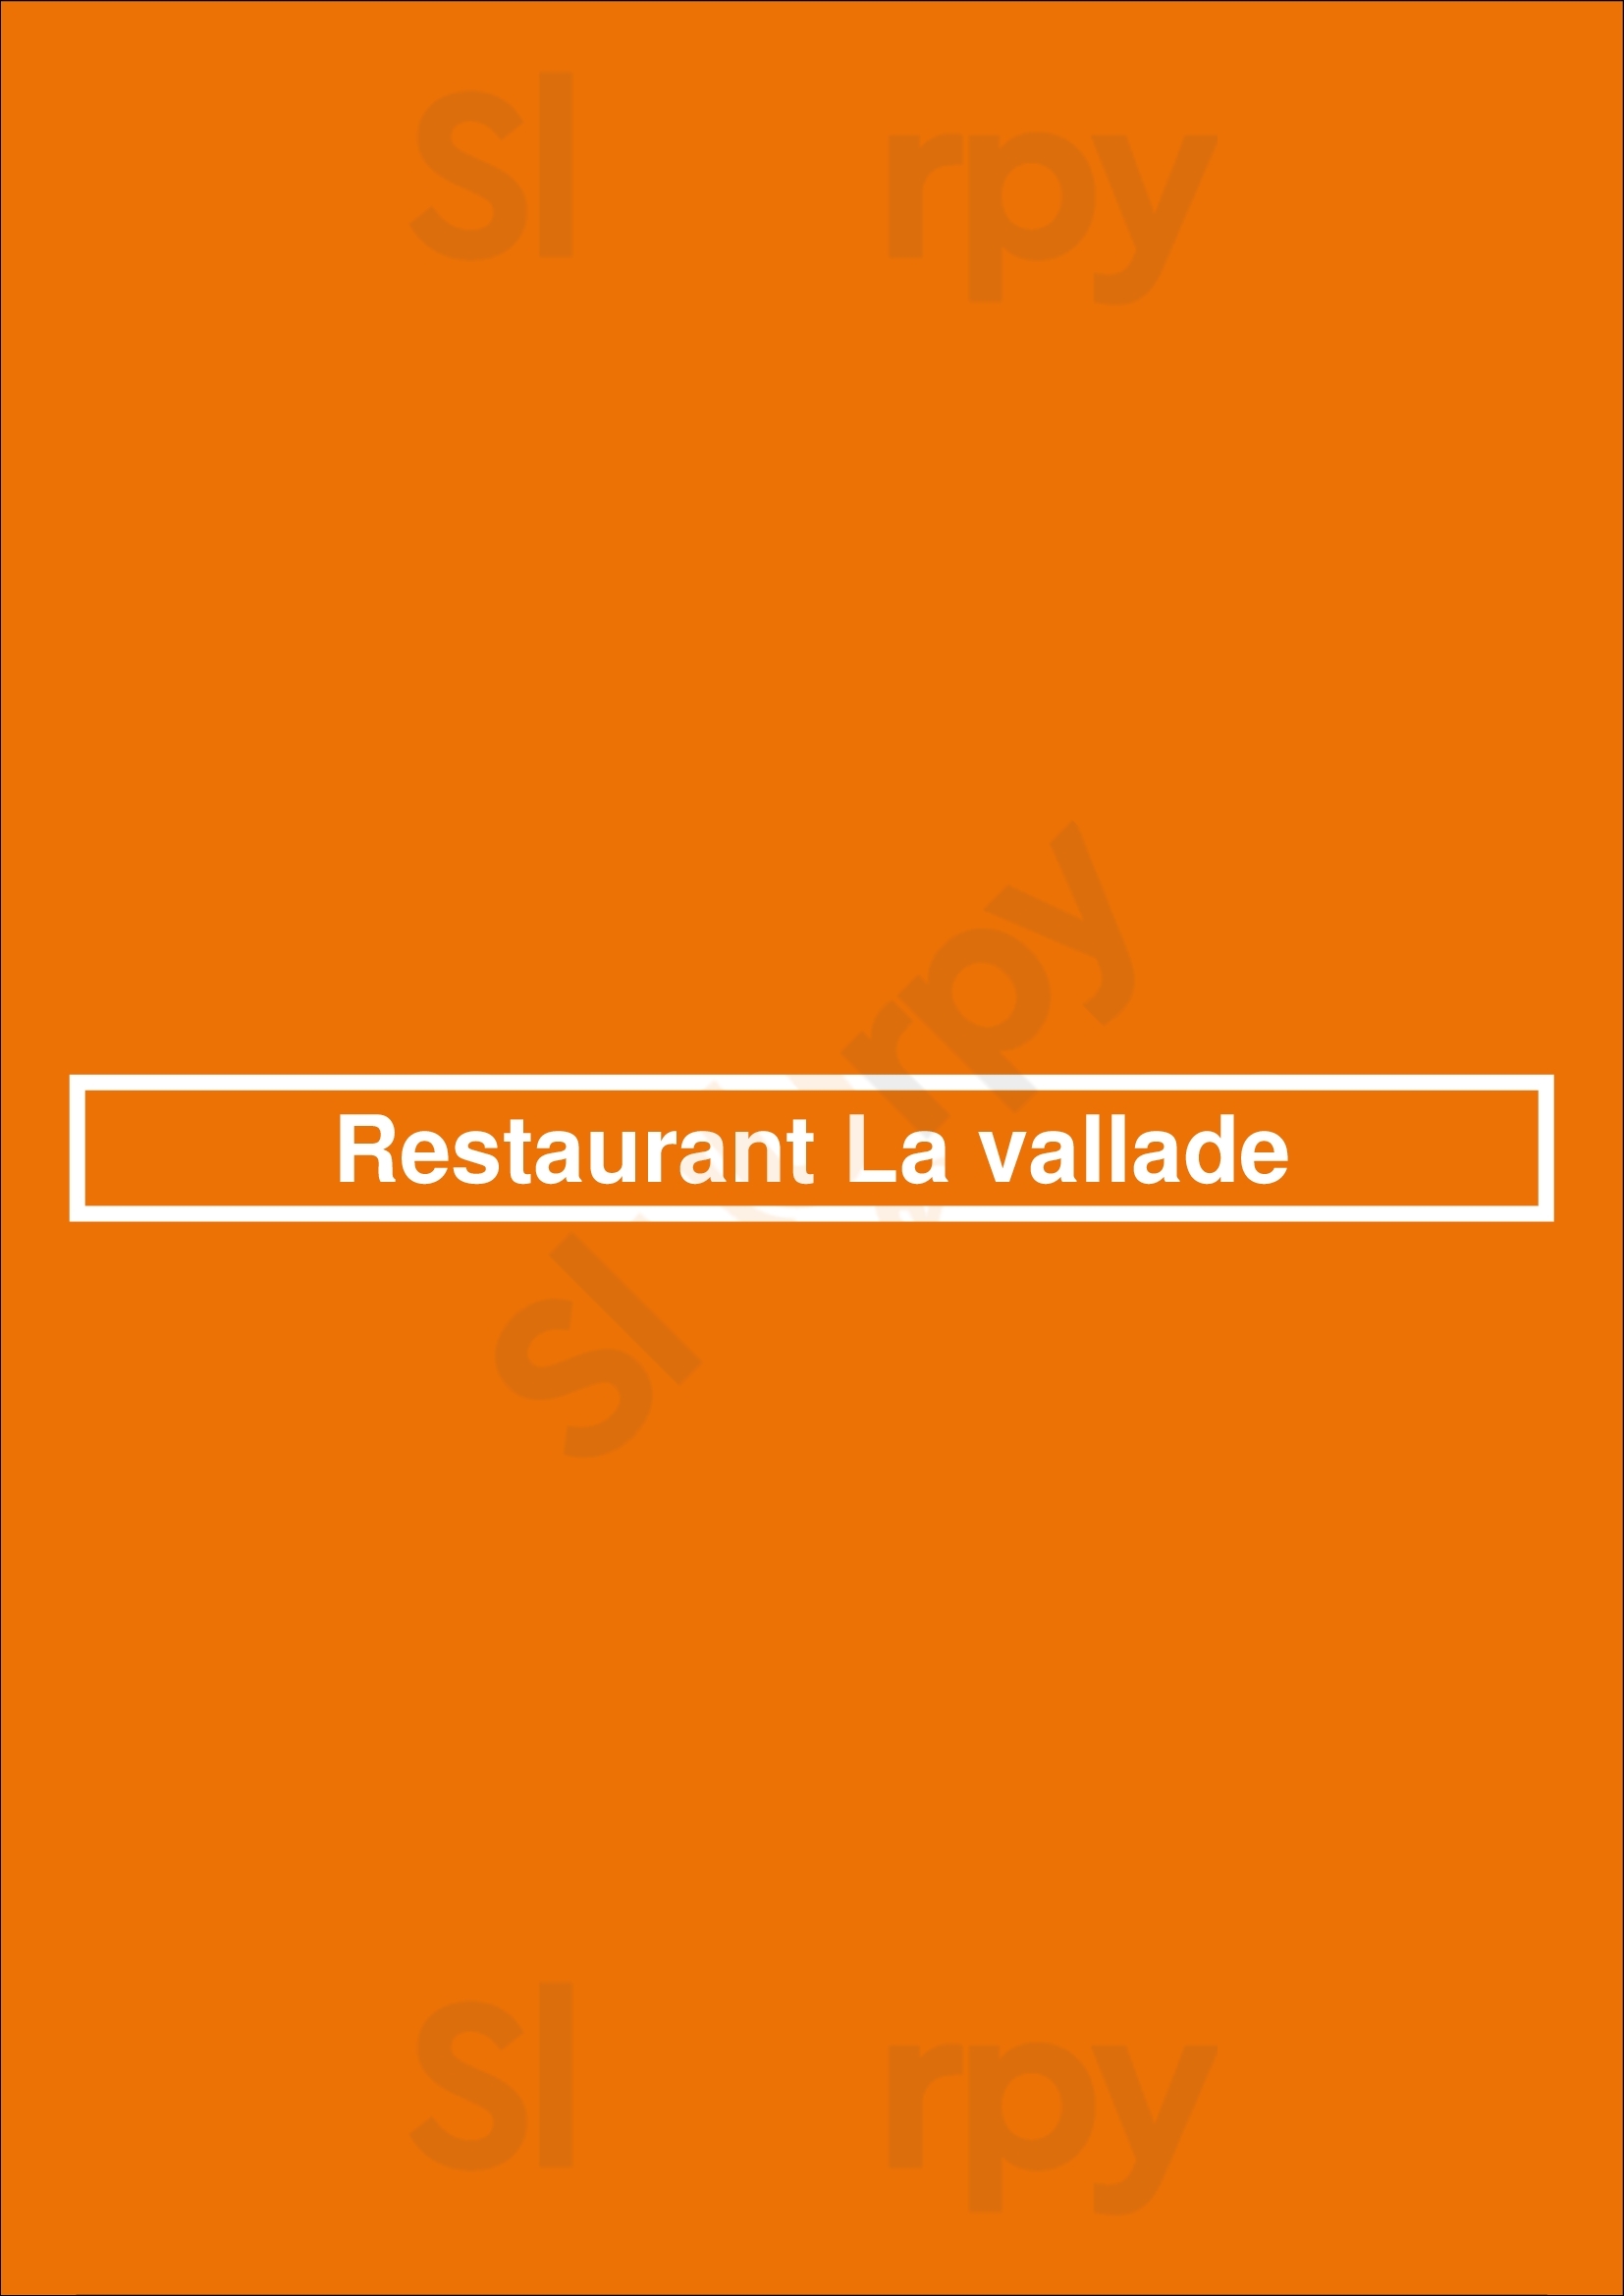 Restaurant La Vallade Amsterdam Menu - 1